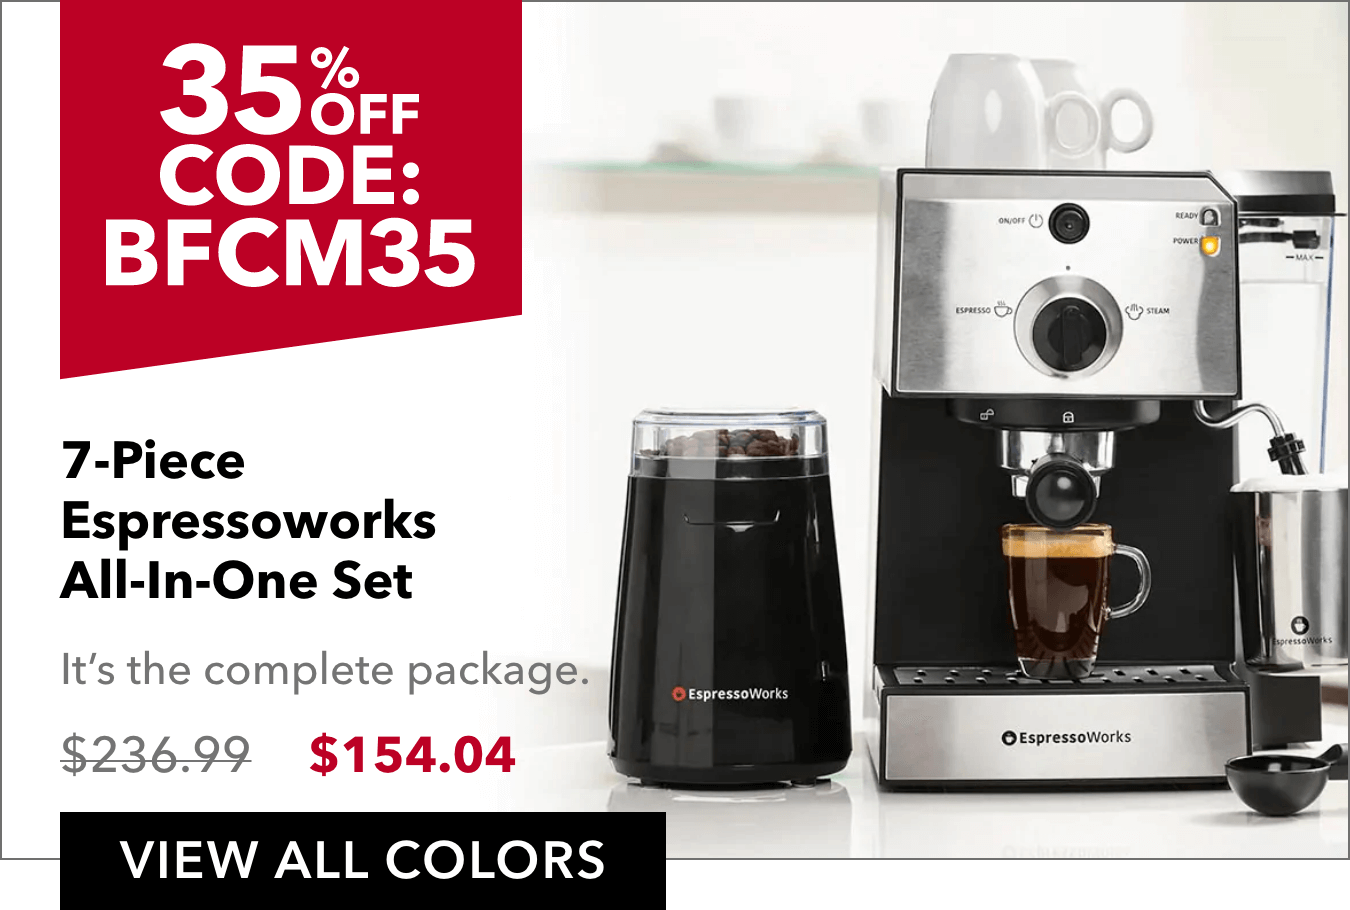 Use code BFCM35 to save 35% on 7-Piece Espresso Machines at EspressoWorks